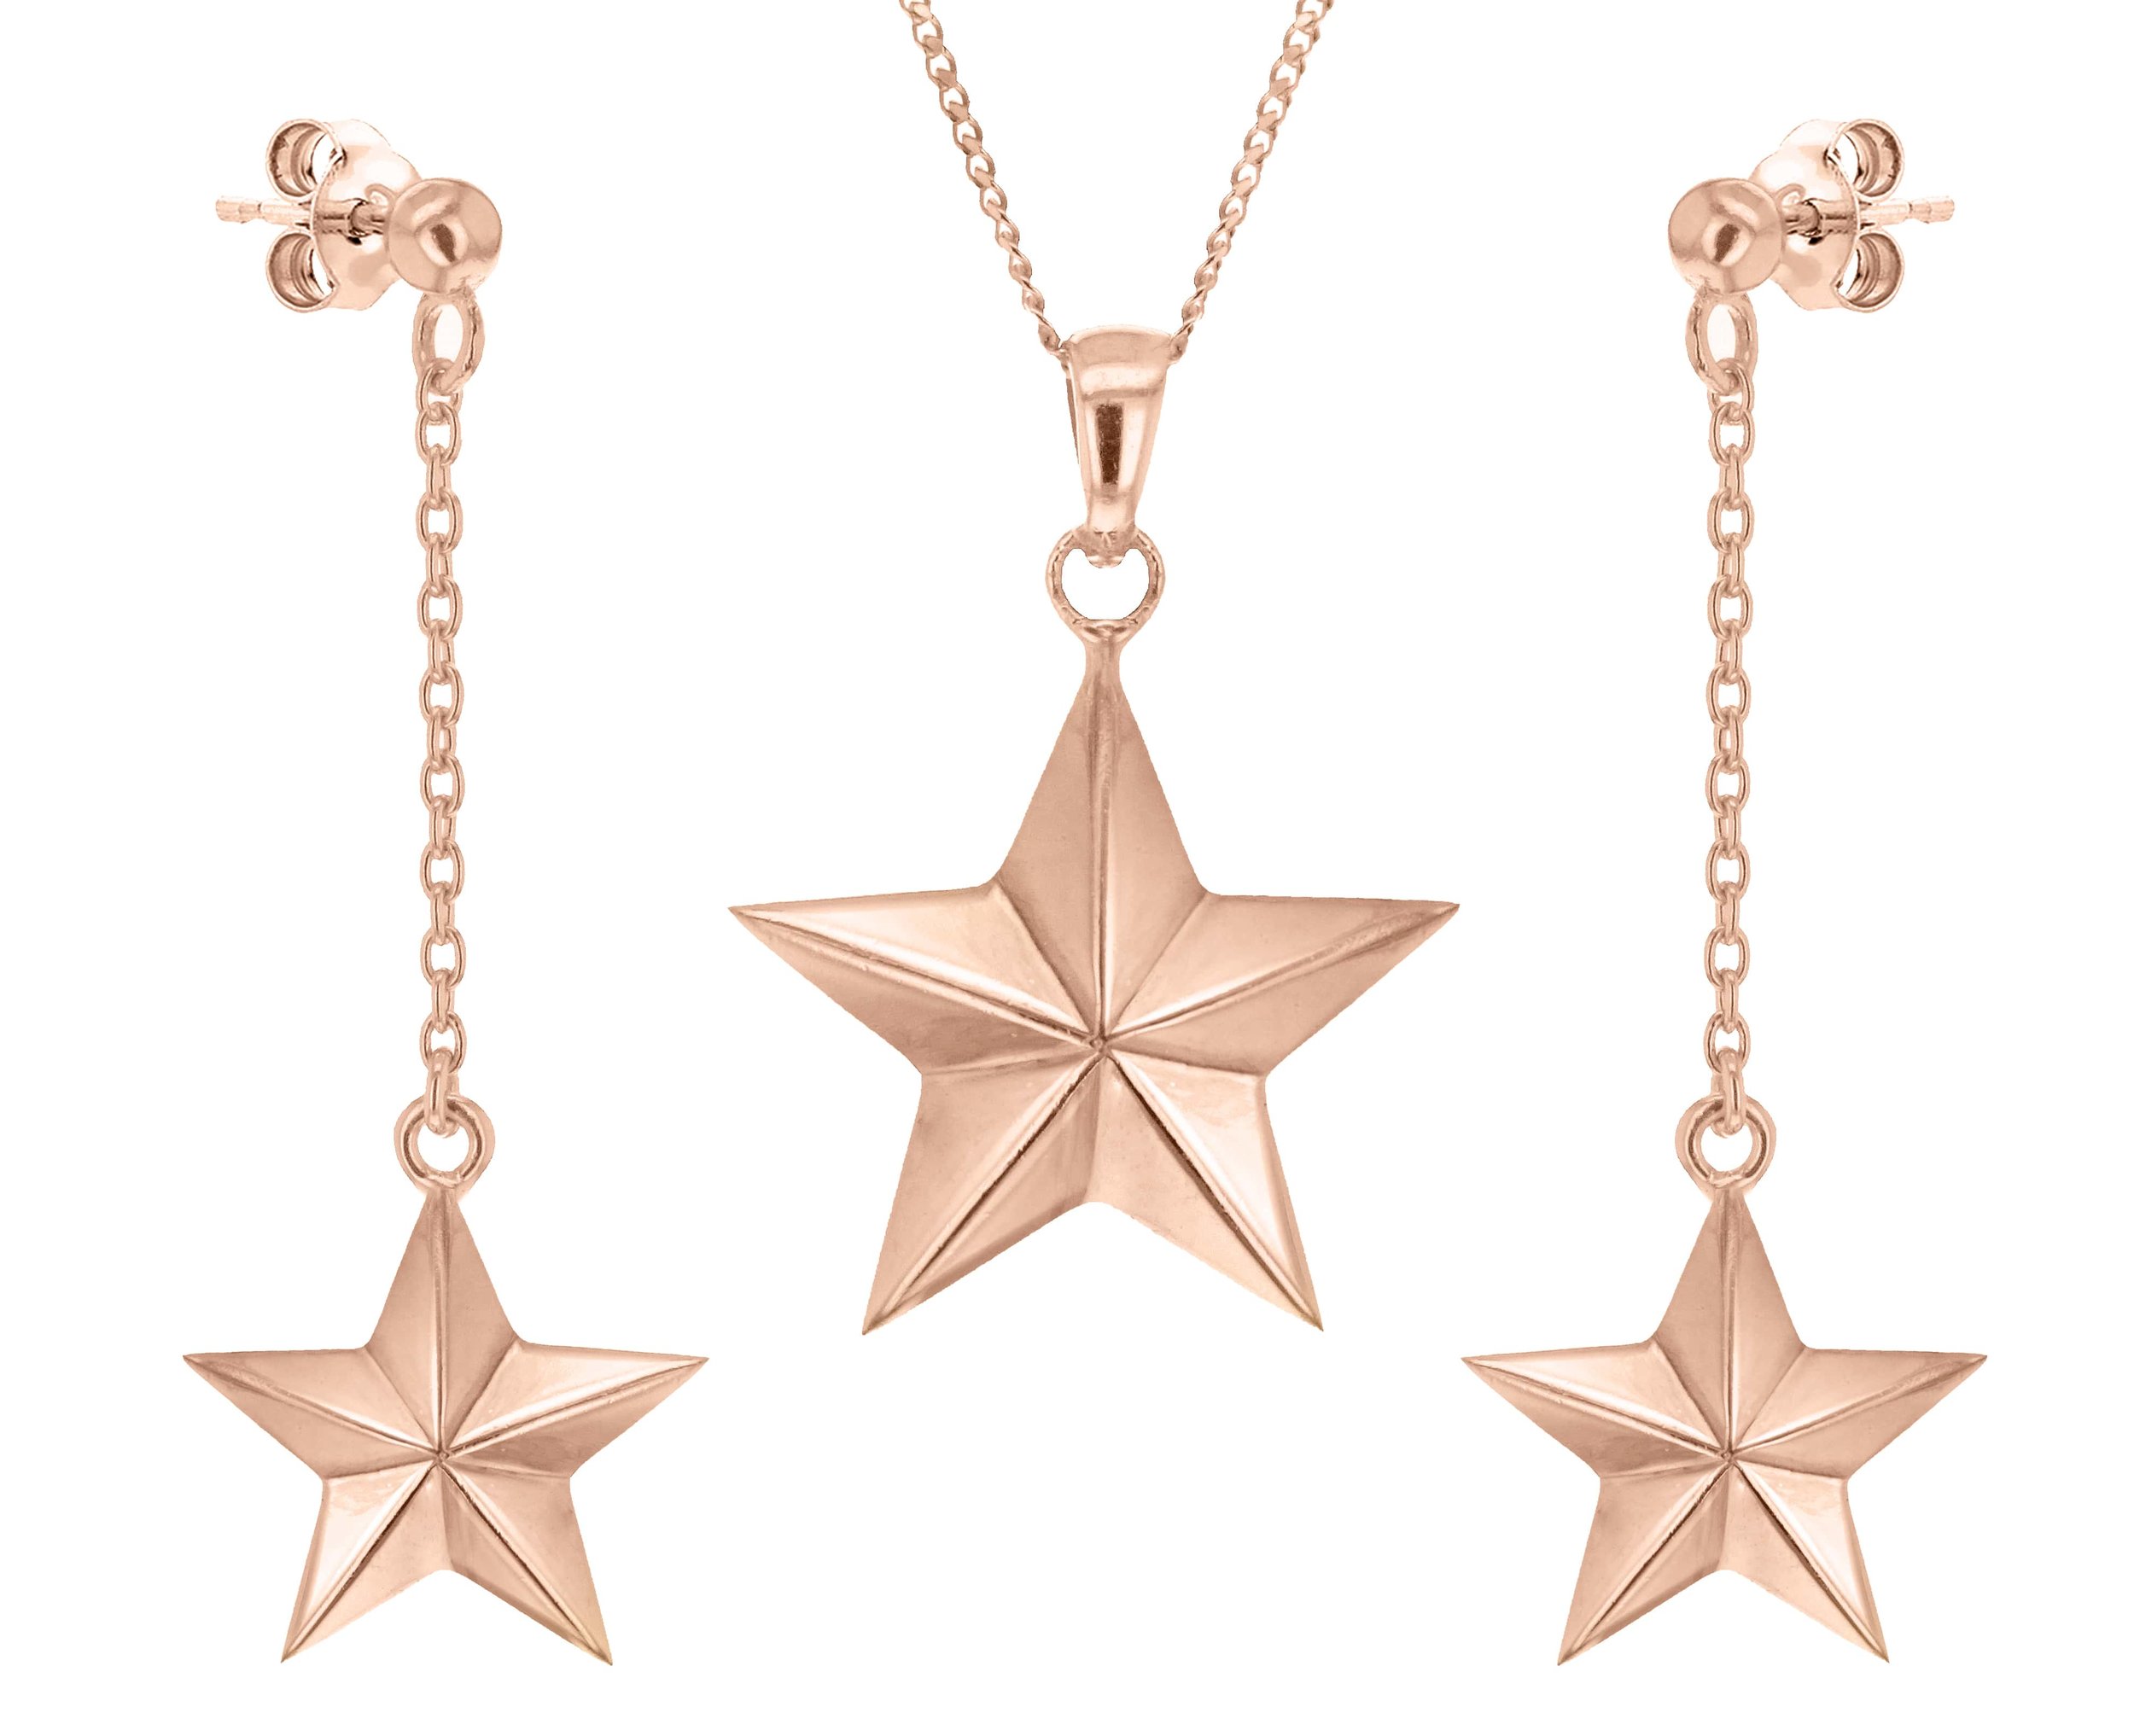 True rocks gold star chain and earrings set